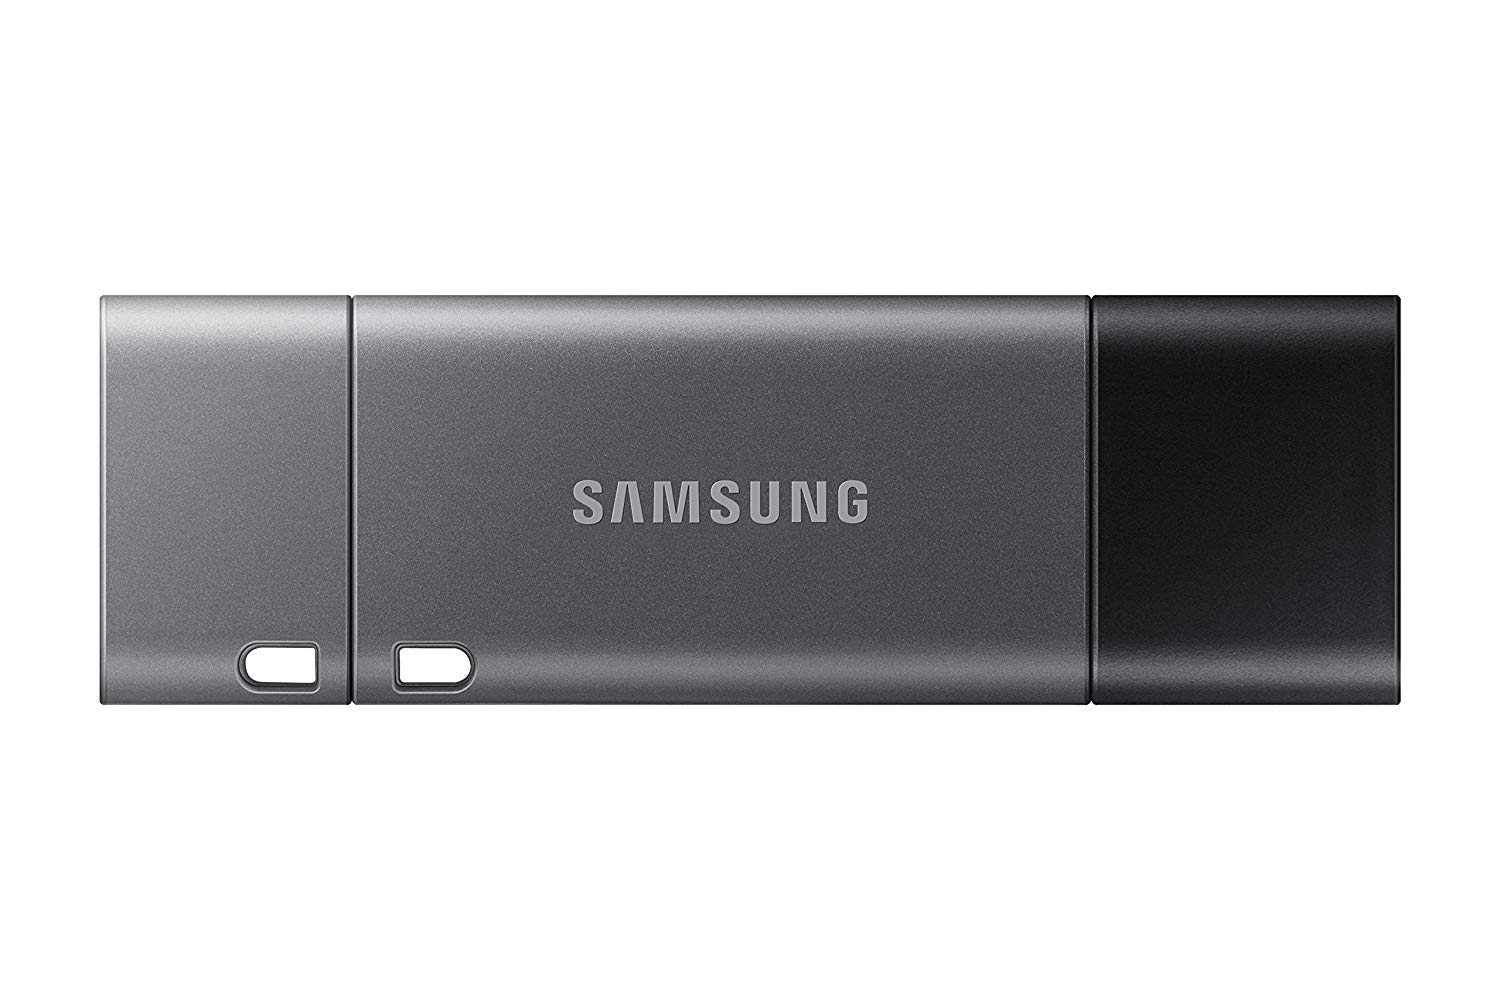 Samsung USB 3.1 Flash Drive DUO Plus 256GB - image 1 of 20